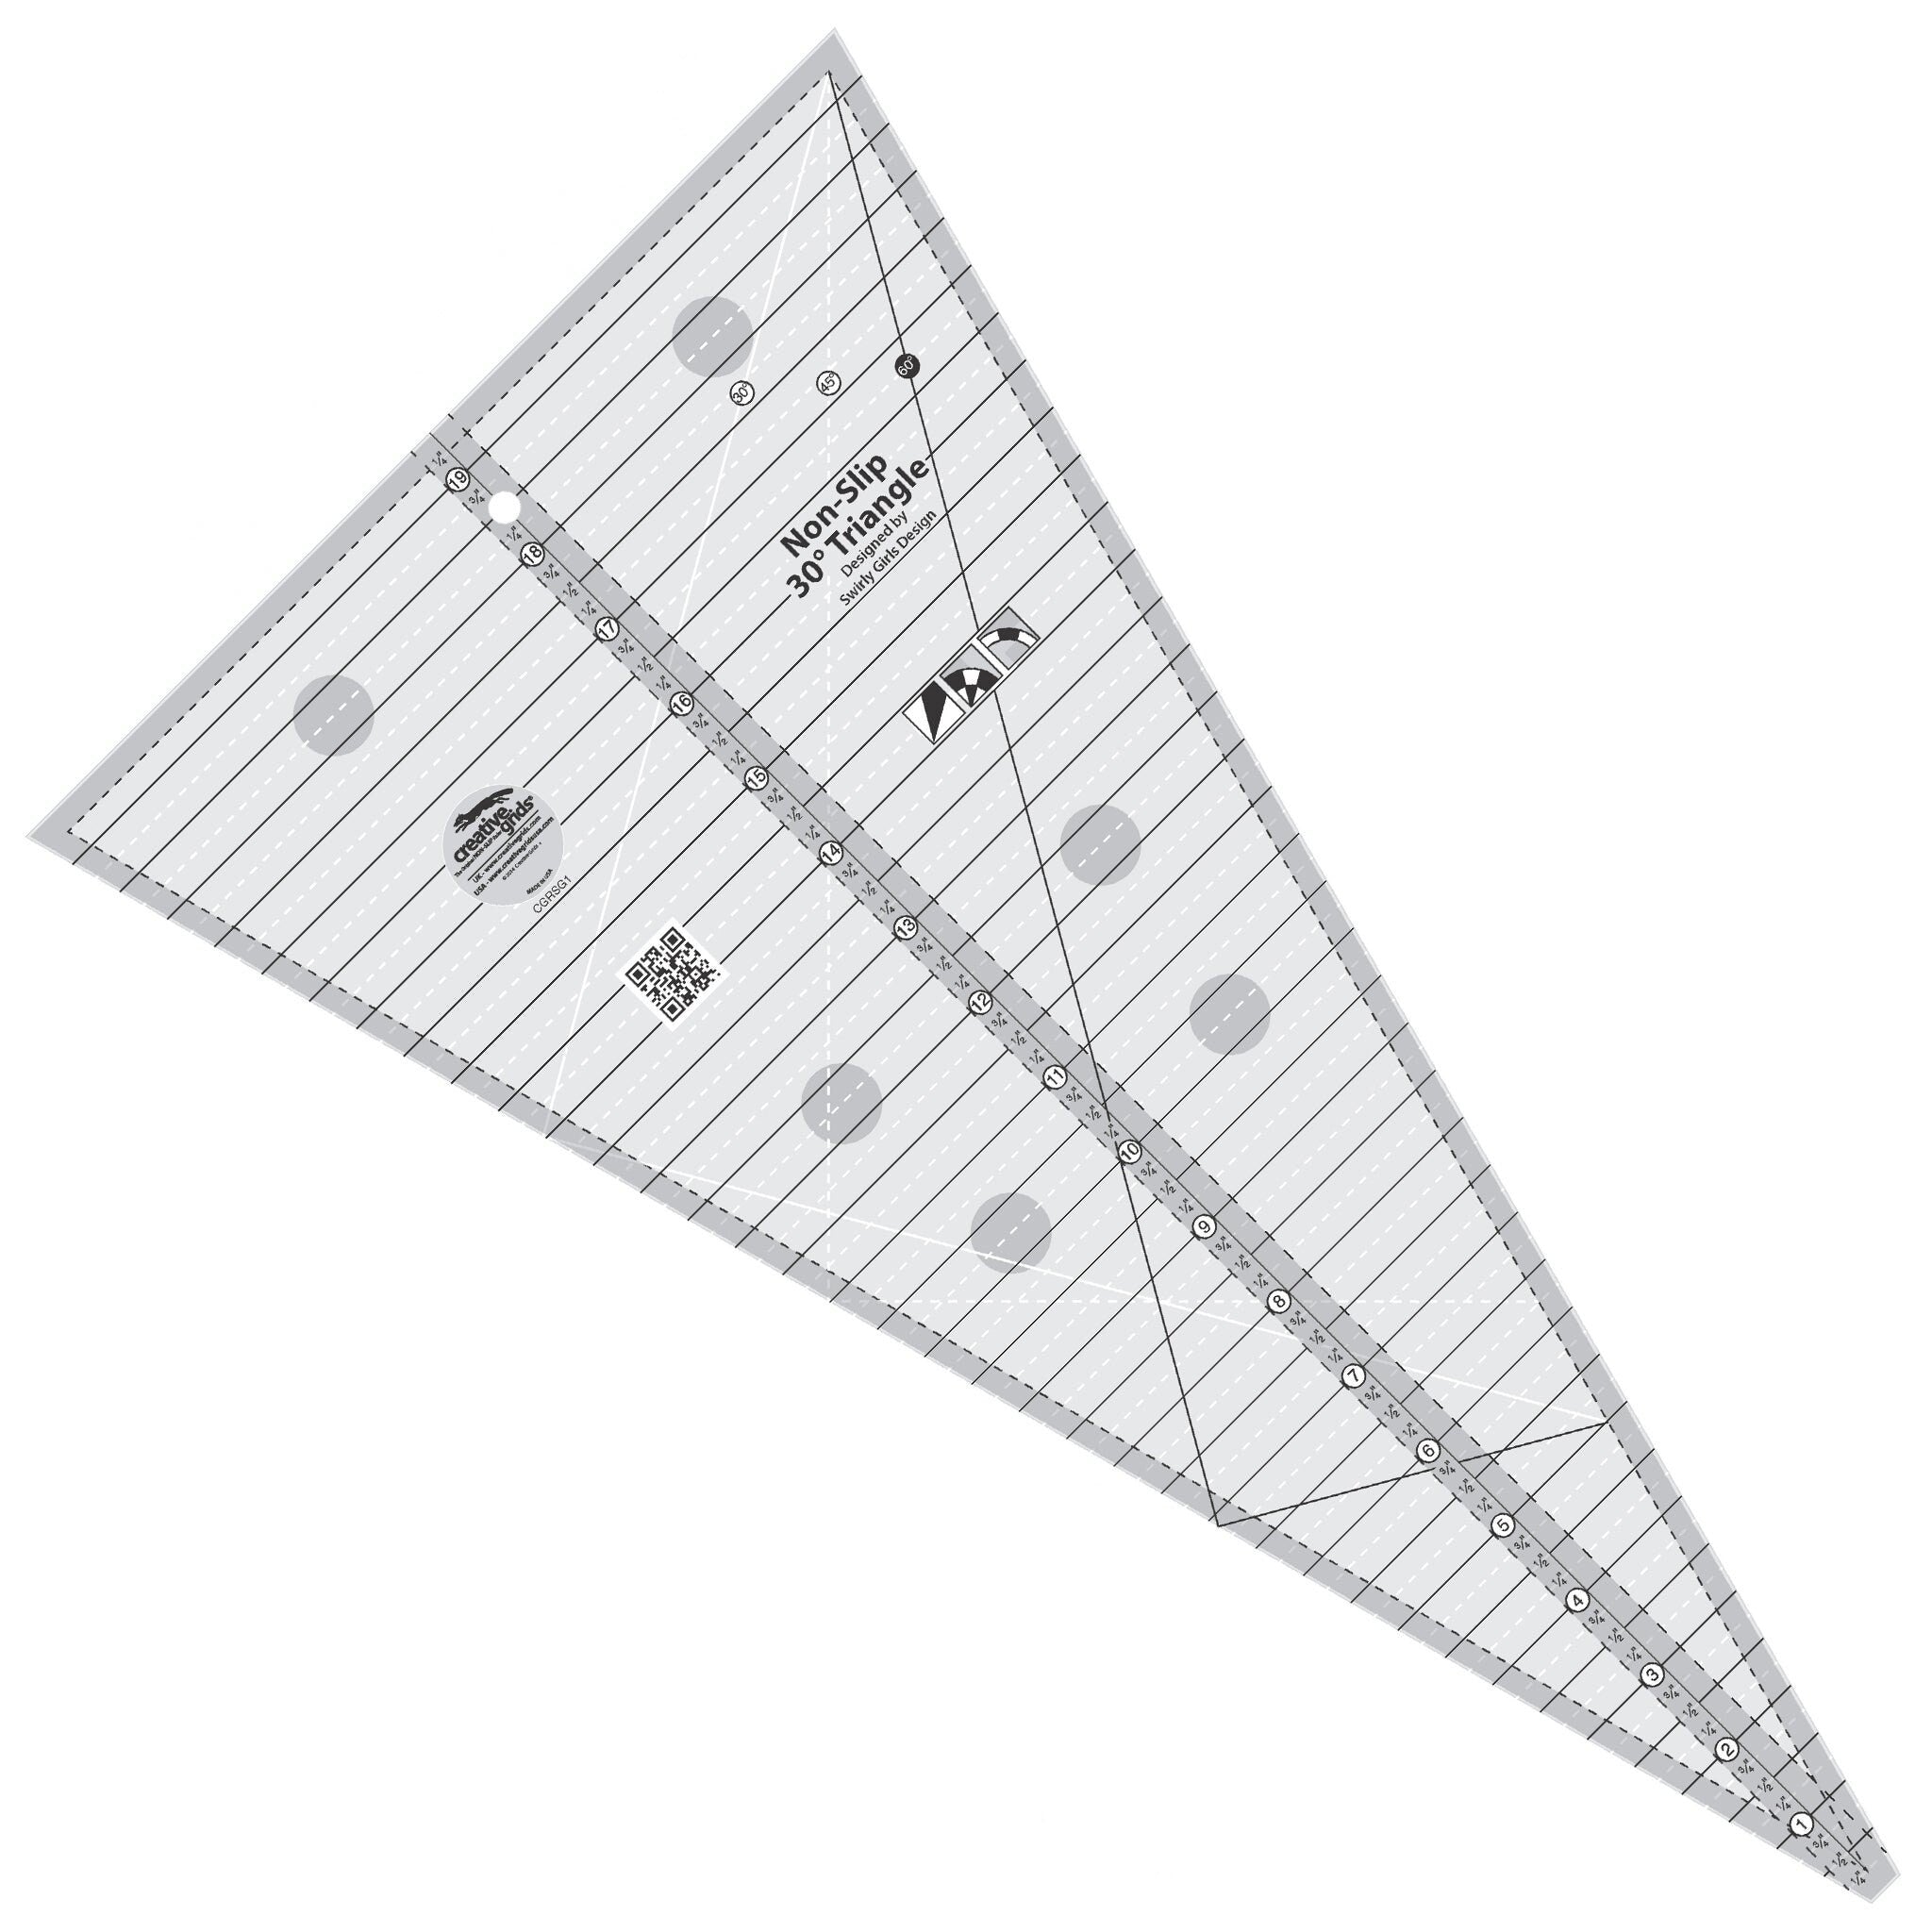 Creative Grids 30 Degree Triangle Ruler CGRSG1 743285001682 Rulers &  Templates - 743285001682